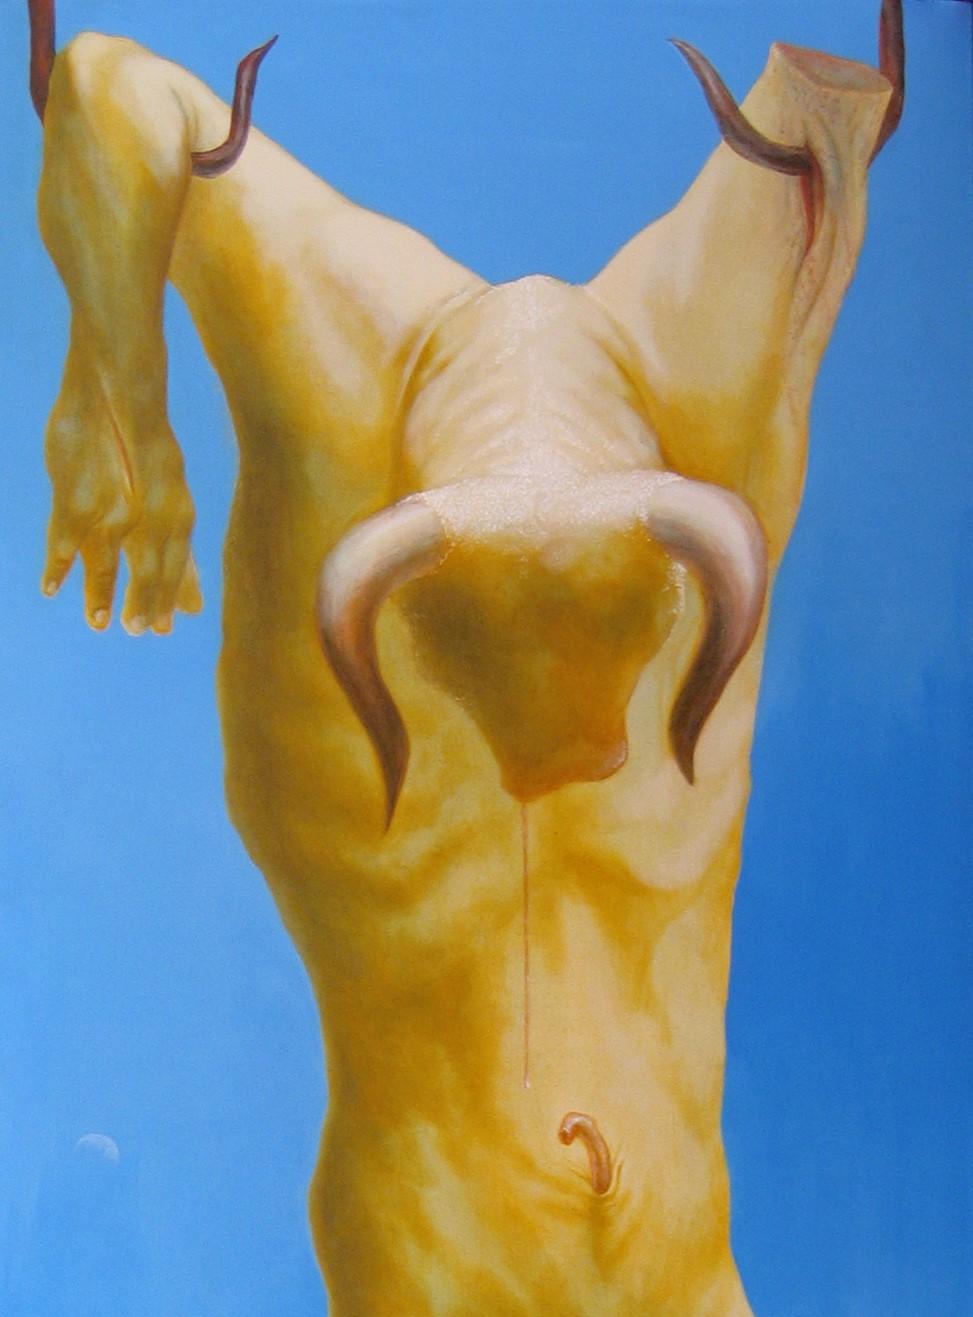 Adorateur - Contemporain, jaune, bleu, animal, minotaure, taureau, mythe, figuratif  - Painting de Alexandru Rădvan